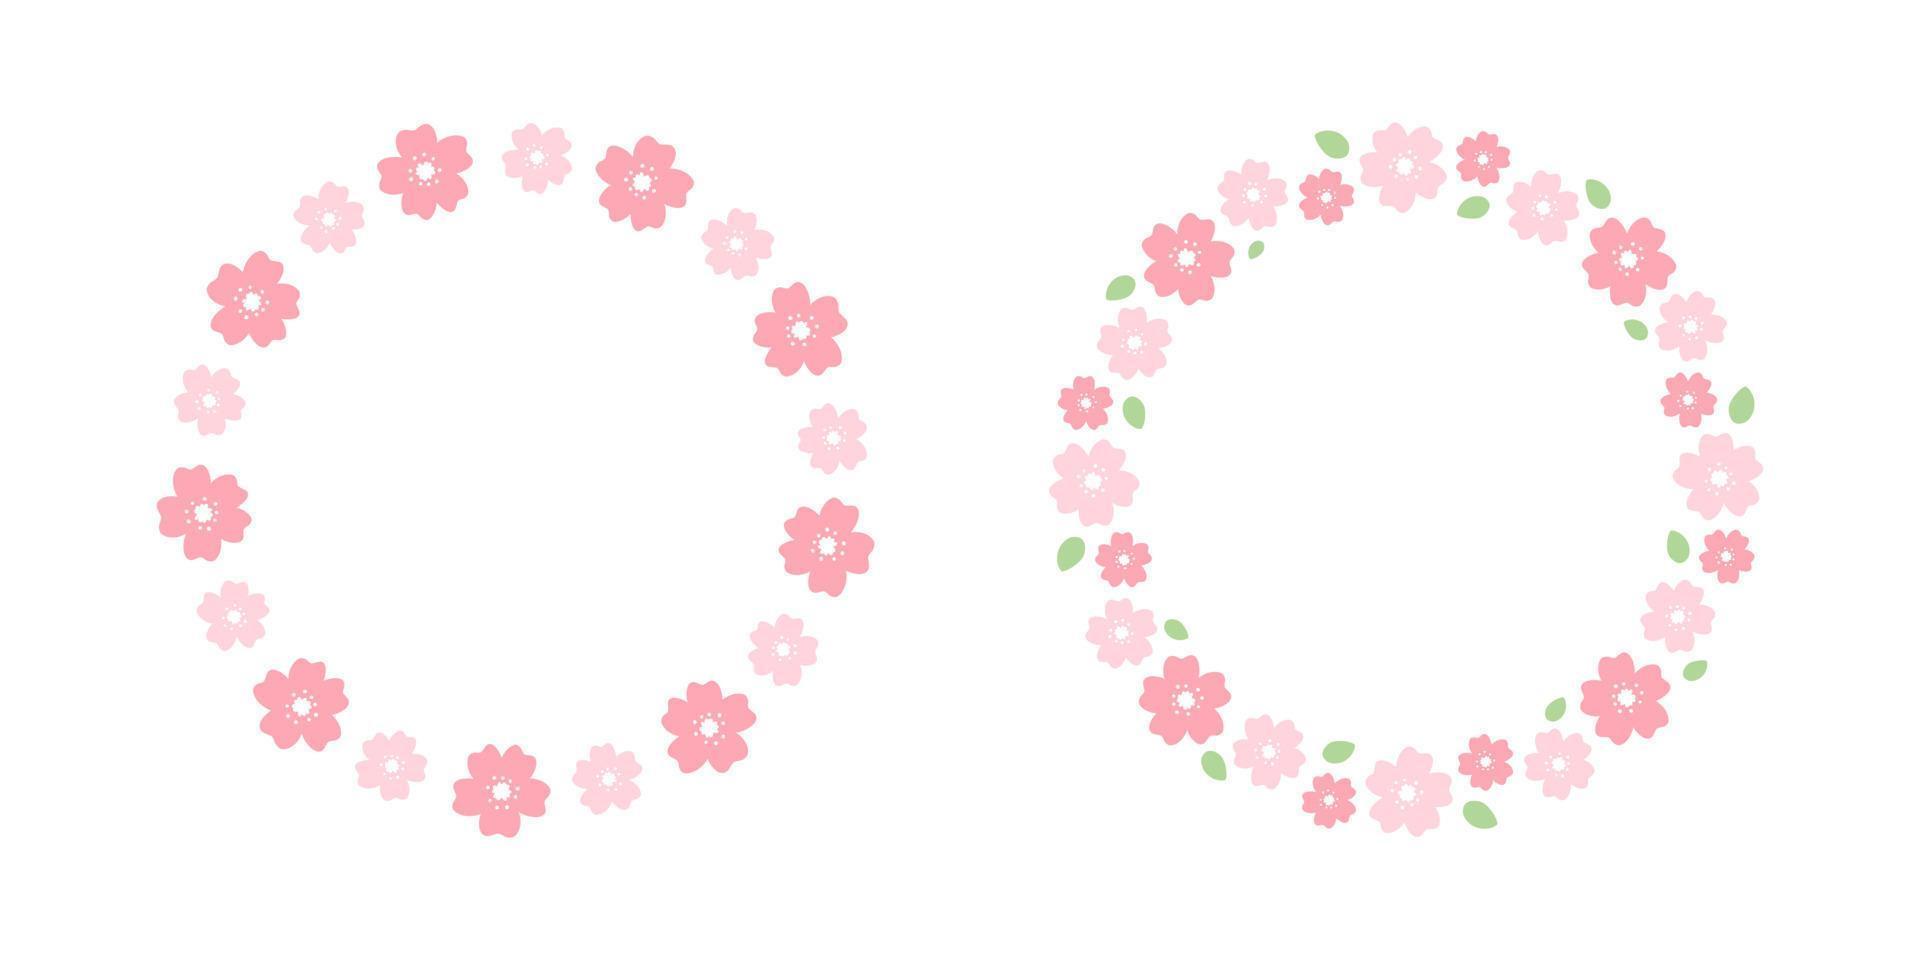 Round Cherry Blossom Frame Set. Cute Floral Wreath Border. vector